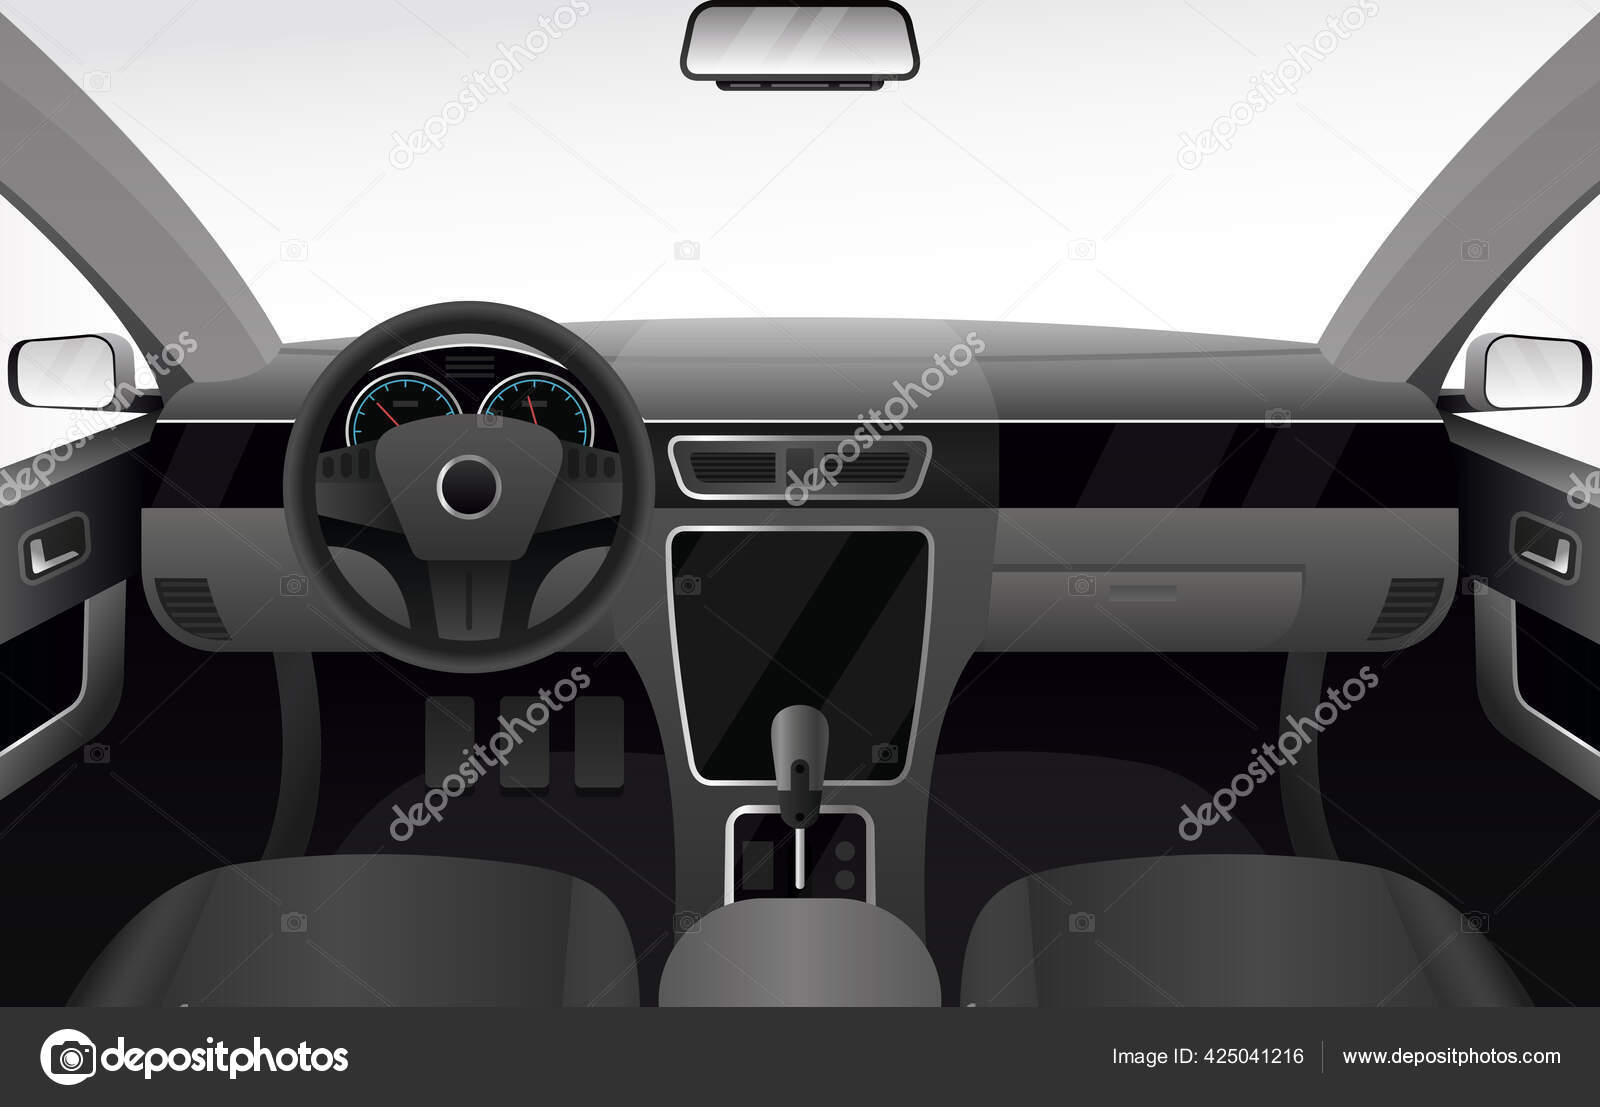 https://st2.depositphotos.com/12889260/42504/v/1600/depositphotos_425041216-stock-illustration-car-dashboard-auto-salon-interior.jpg